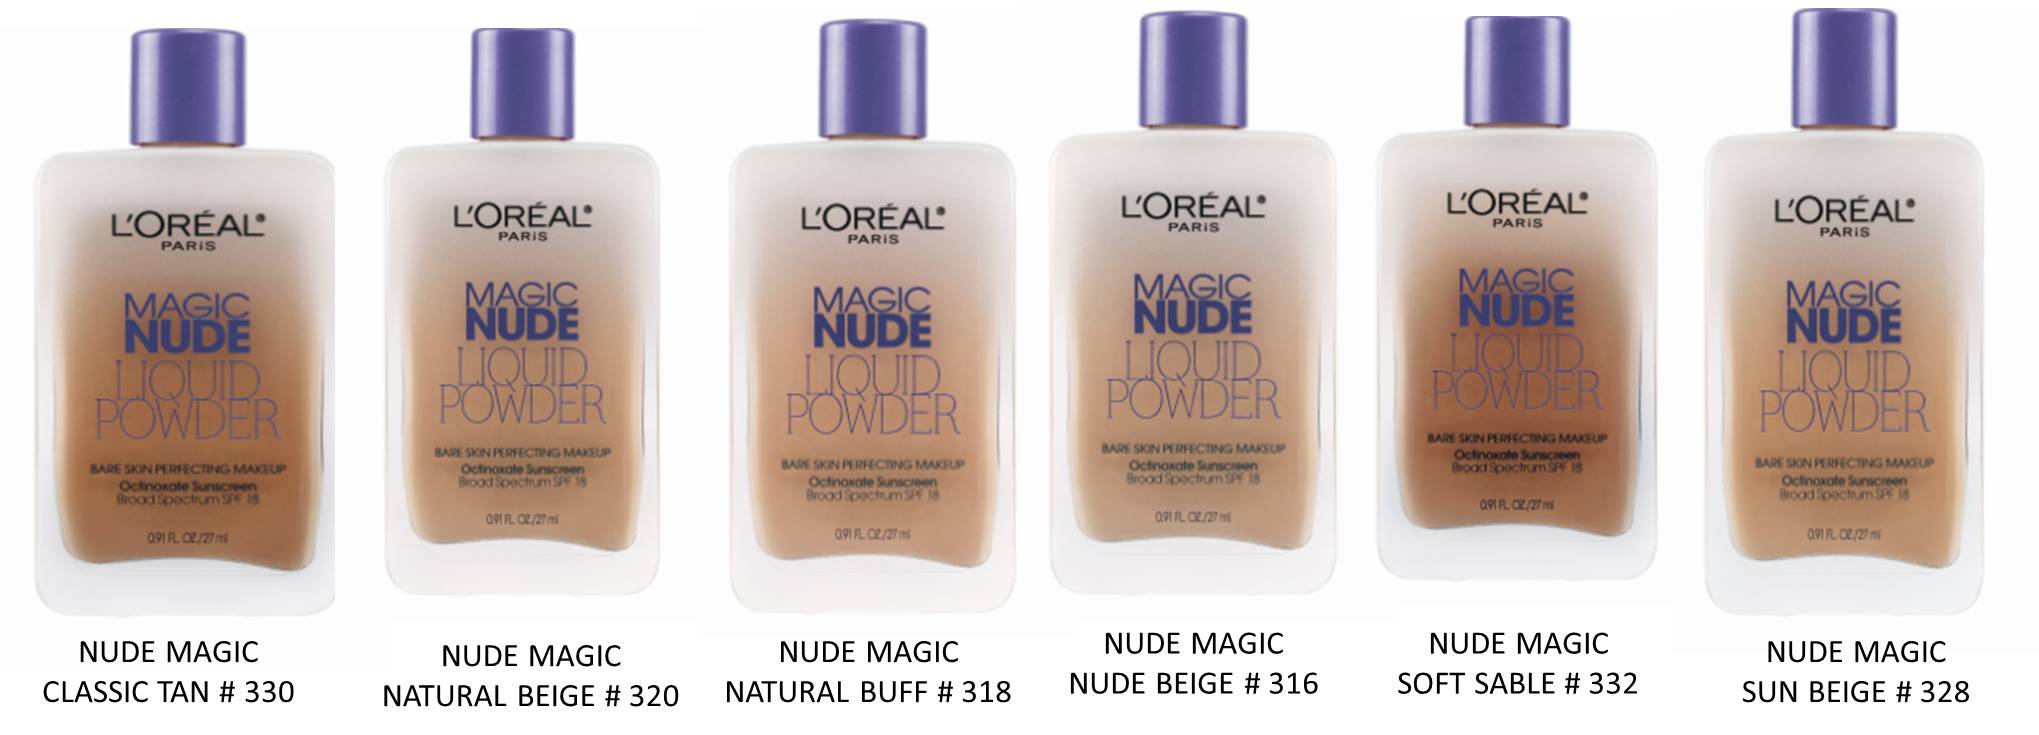 L'Oreal Magic Nude Eau De Teint Fresh Foundation - Nude Beige